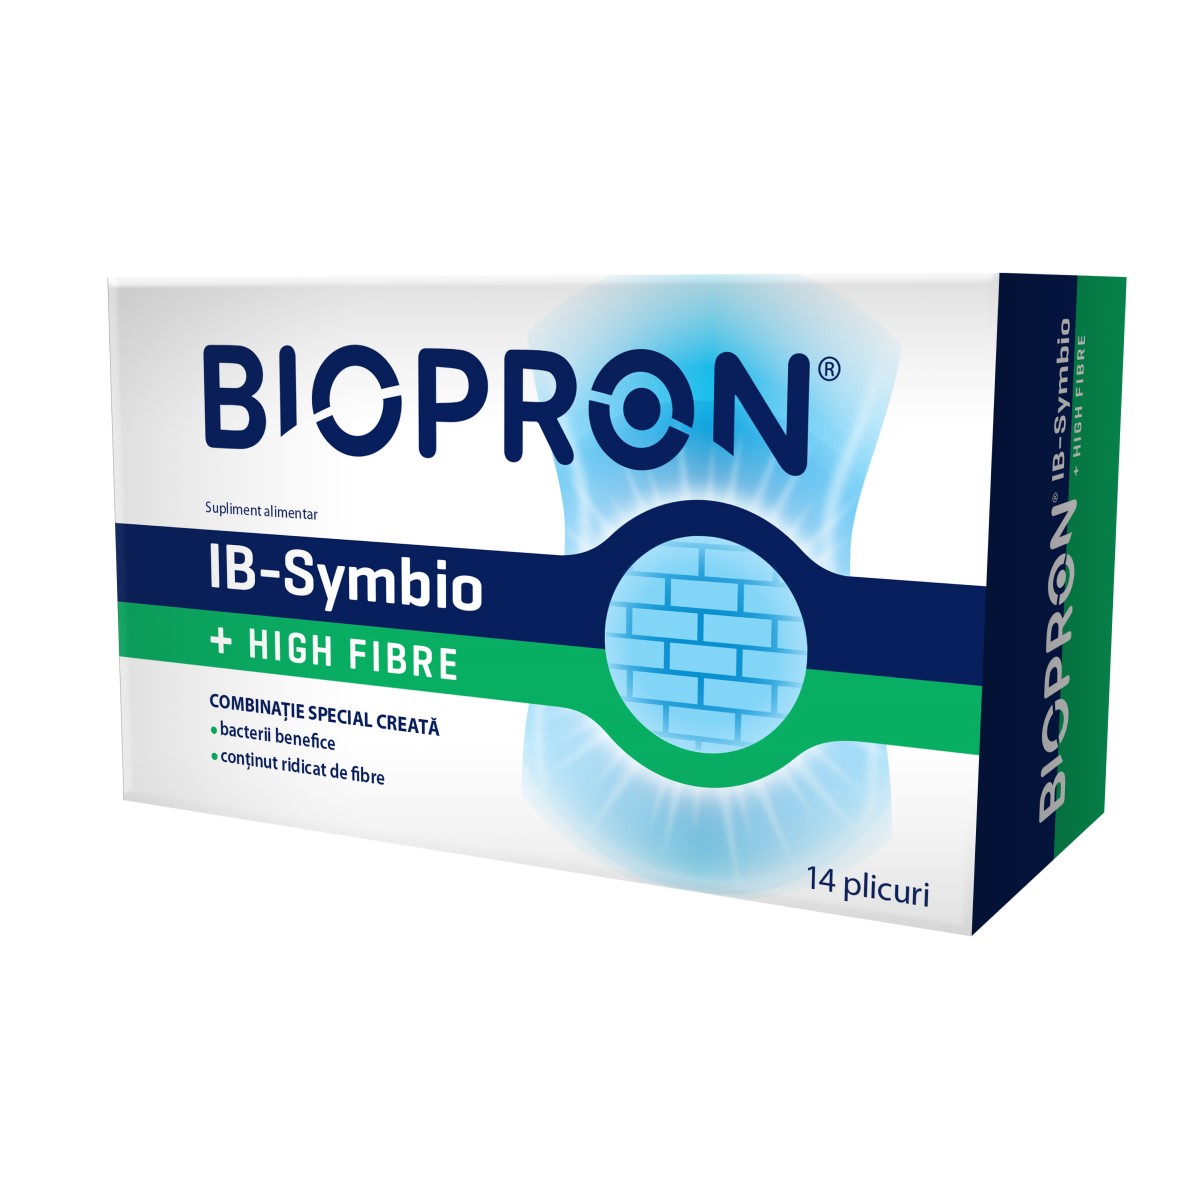 Biopron IB-Symbio + High Fibre, 14 plicuri, Walmark